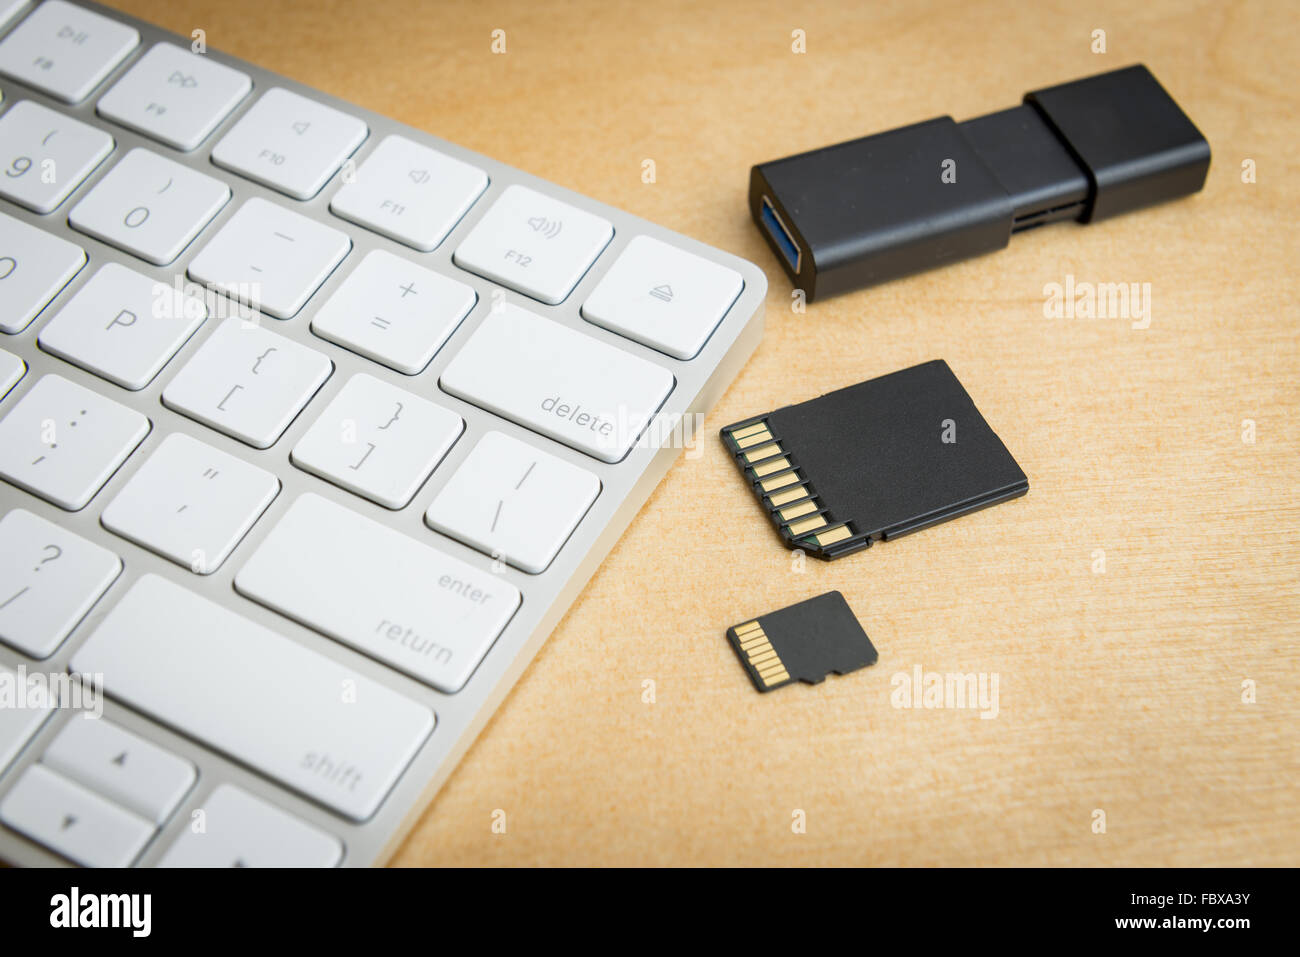 close up wireless keyboard and three types of memory storage, SD, mini SD, flash drive Stock Photo